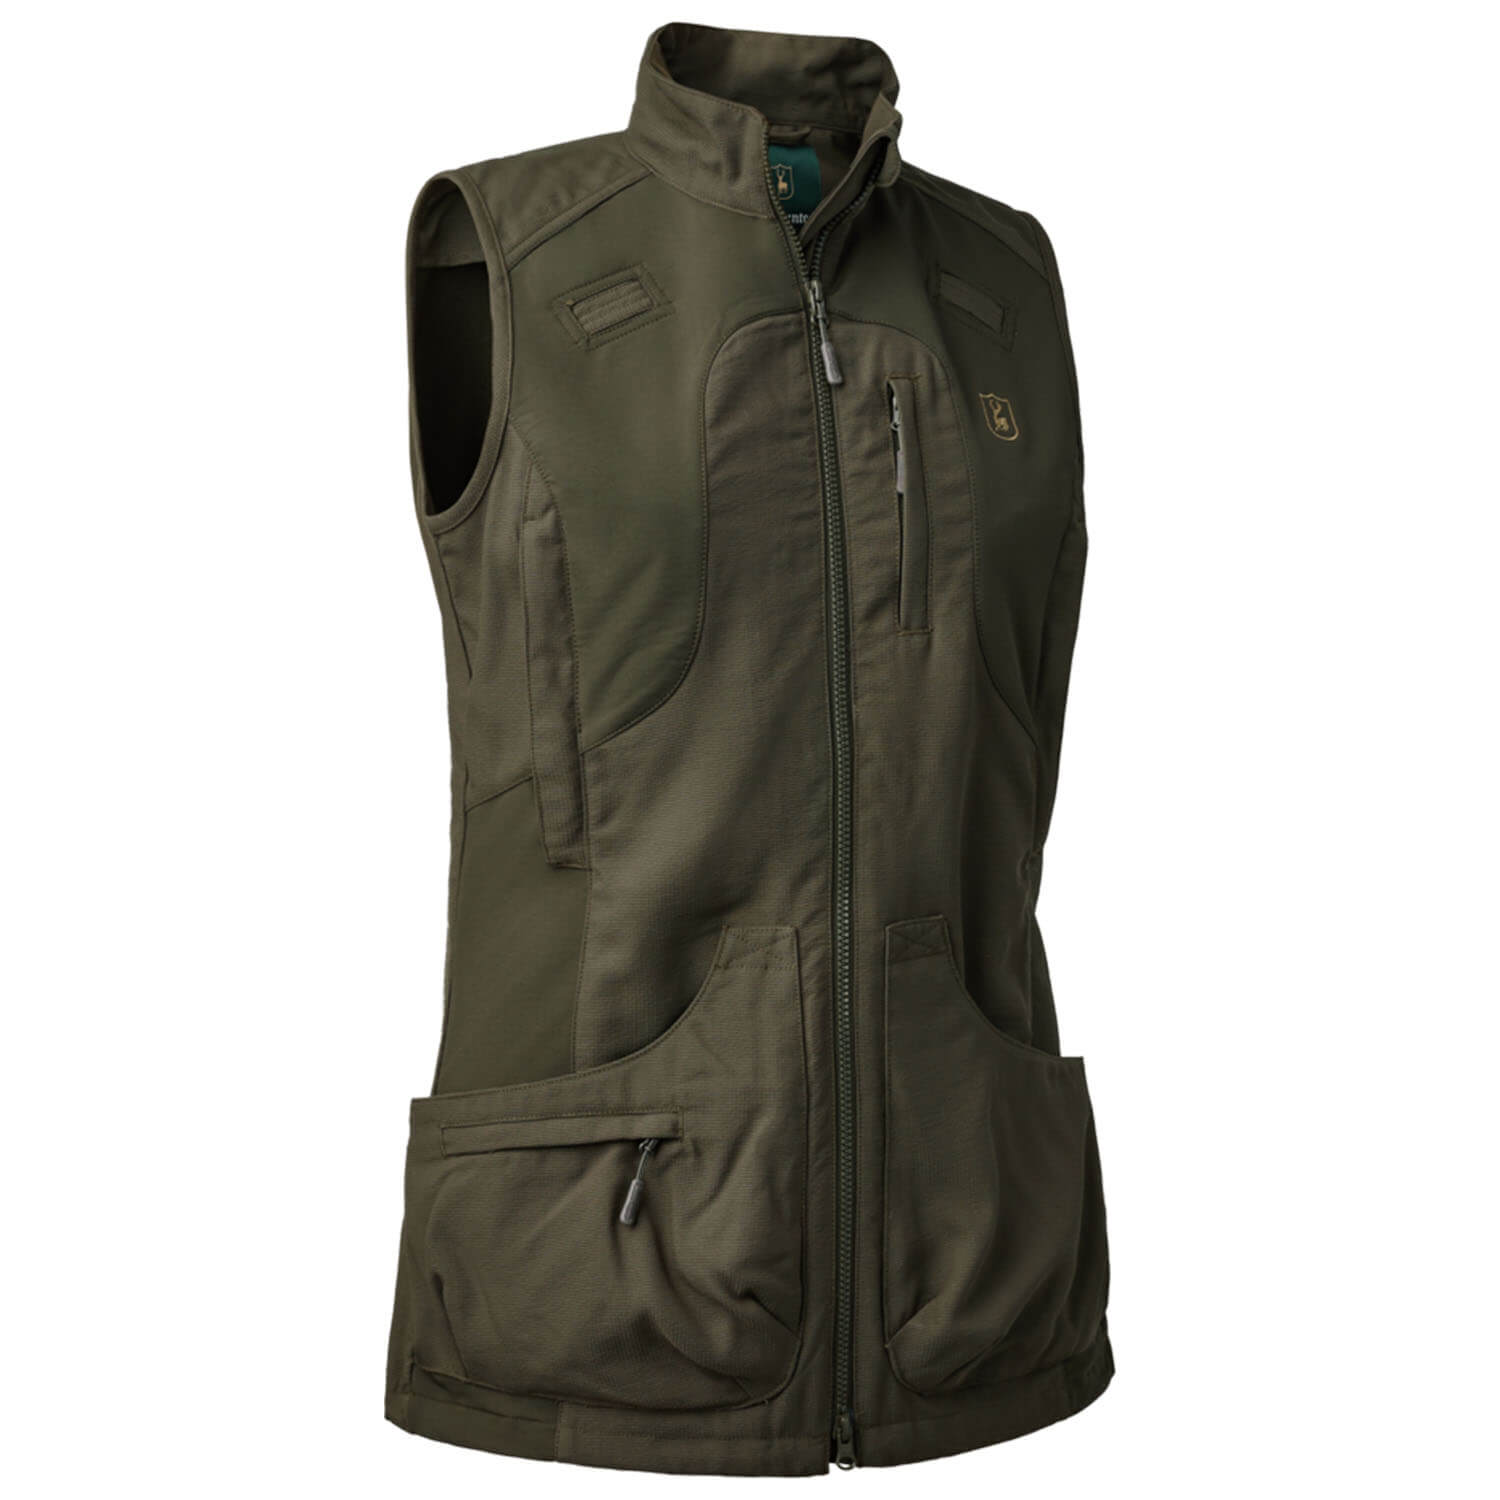 Deerhunter Vest Lady Ann Extreme - Women's Hunting Clothing 